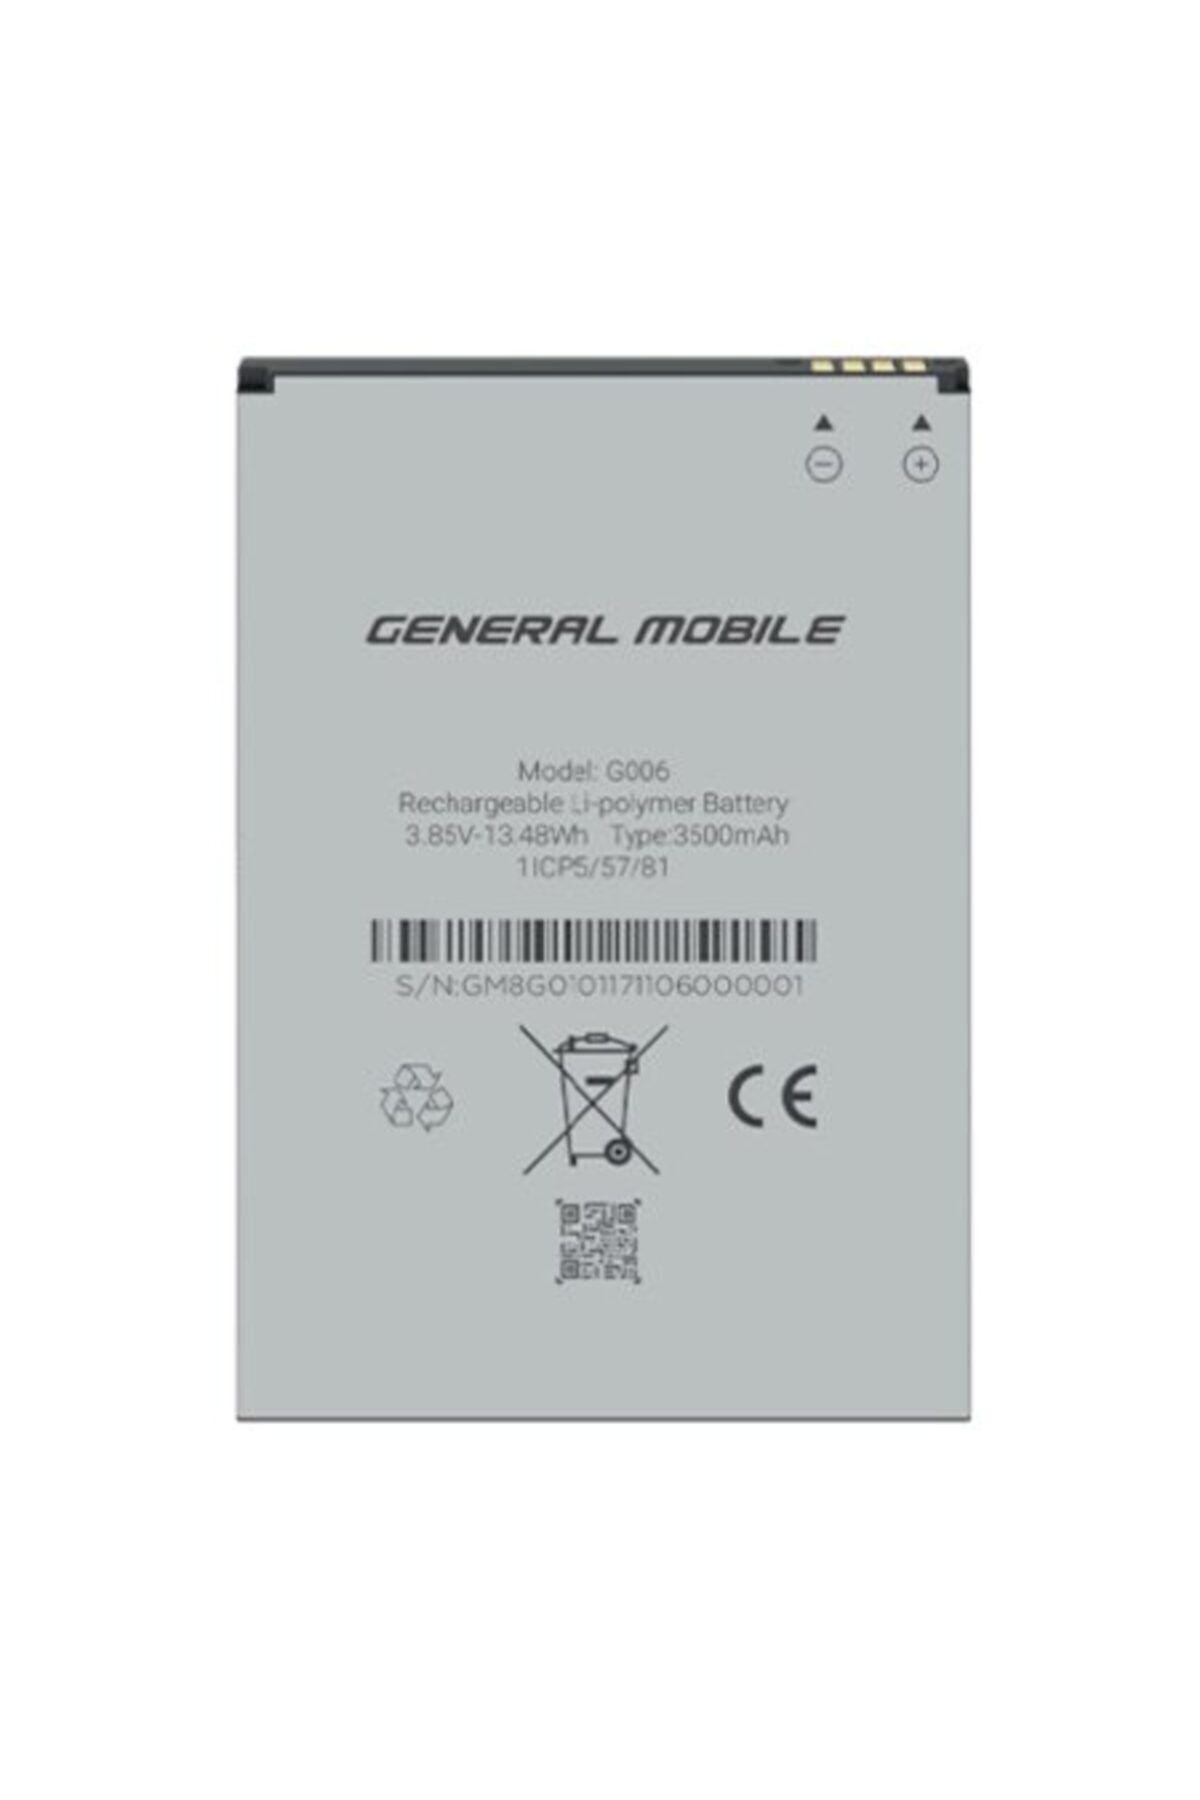 General Mobile Gm8 Go Gm9 Go Gm6 Ds %100 Orjinal Batarya Pil